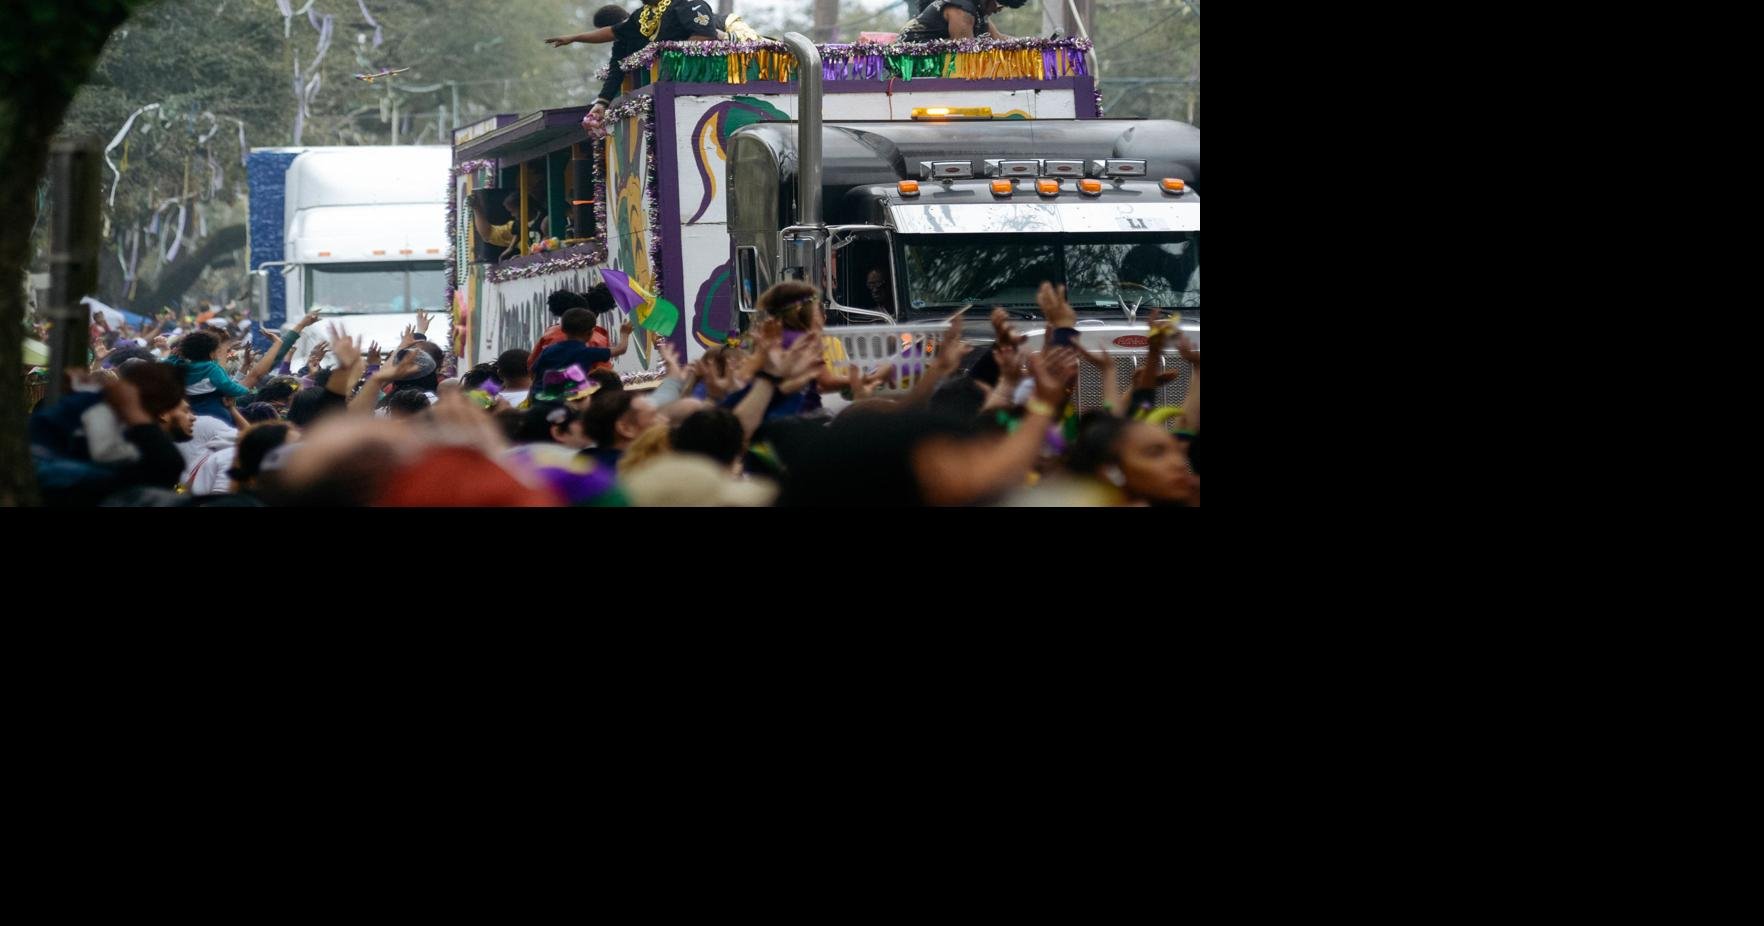 Mardi Gras truck parade faces danger after dark, captain says. ‘We have zero protection’ – NOLA.com